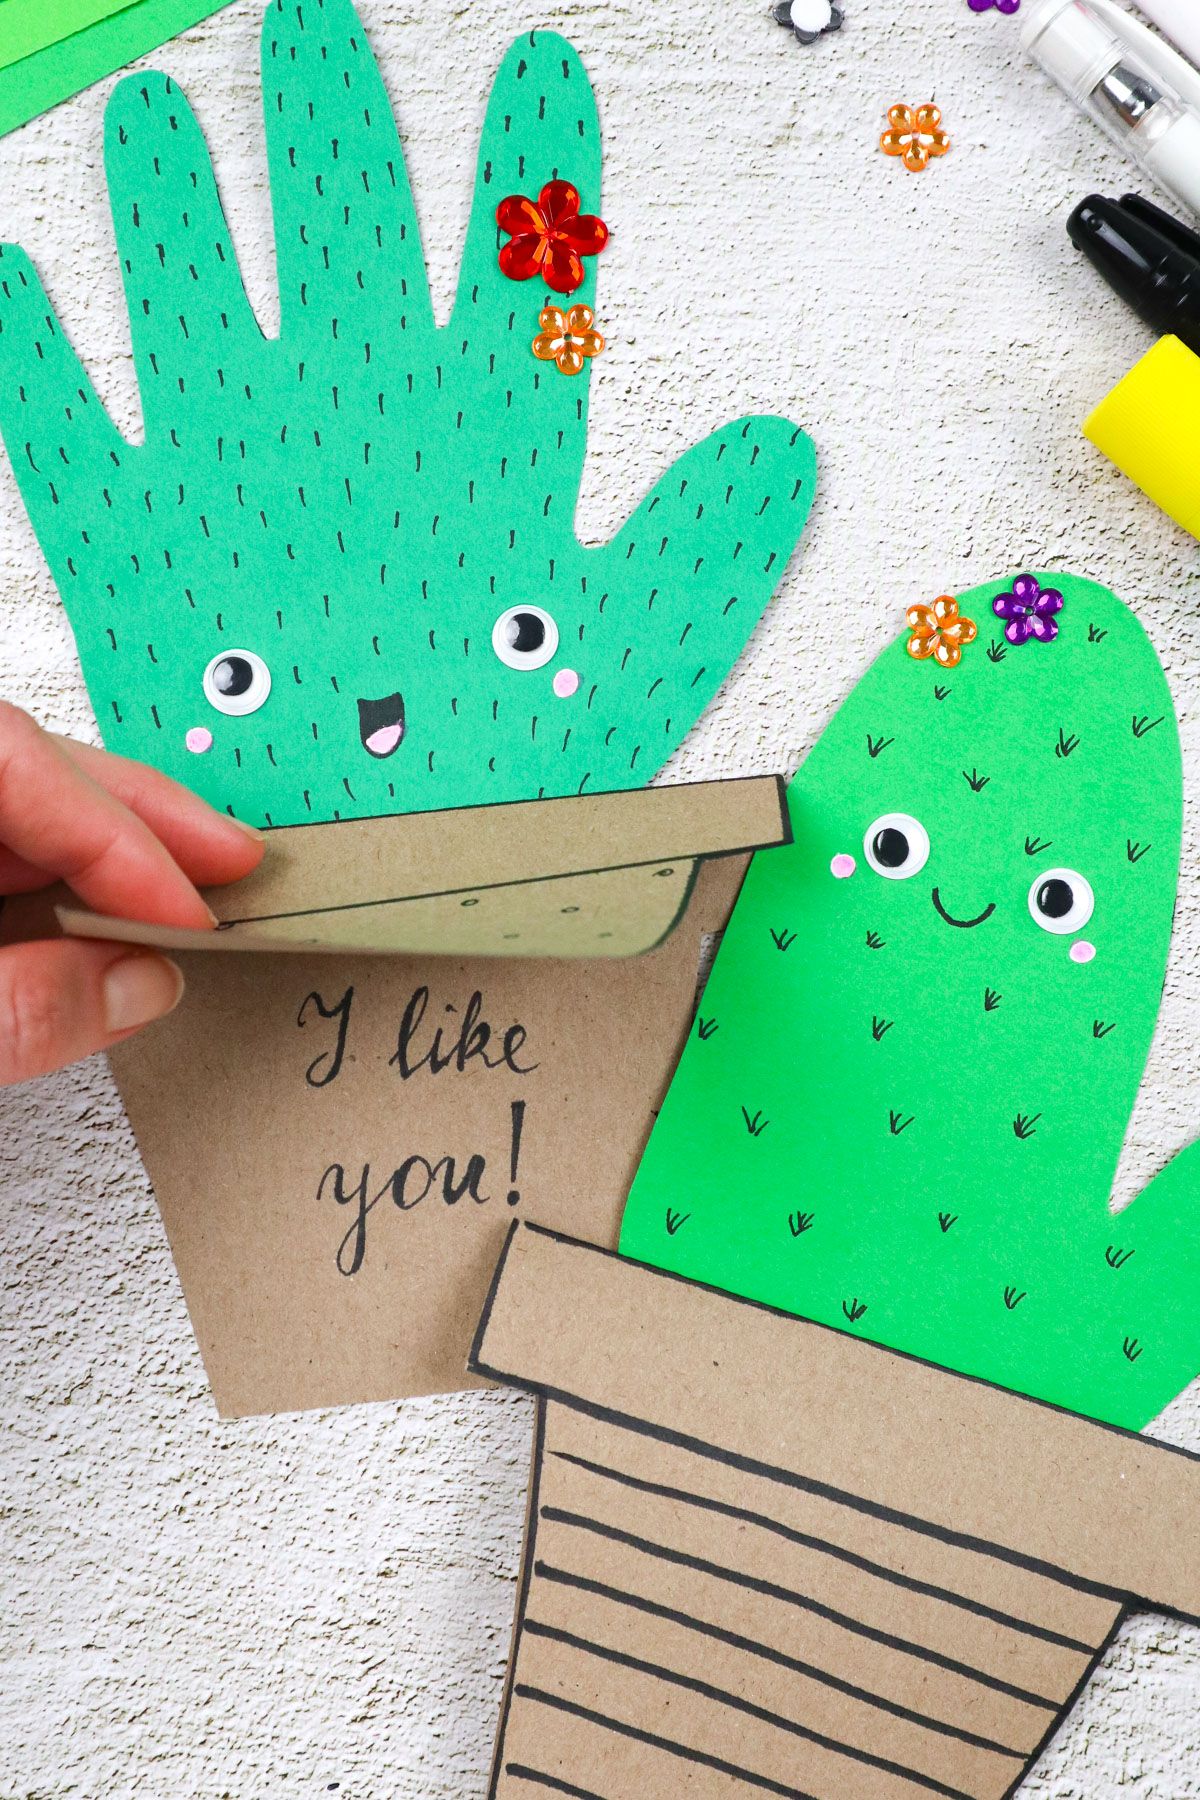 DIY Handprint Cactus craft idea